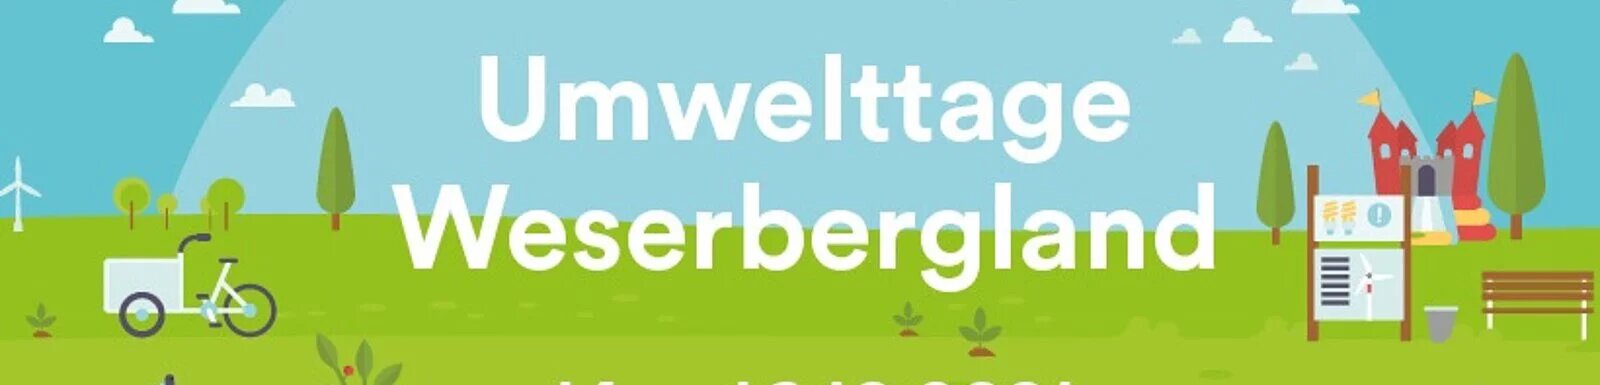 Die Umwelttage Weserbergland